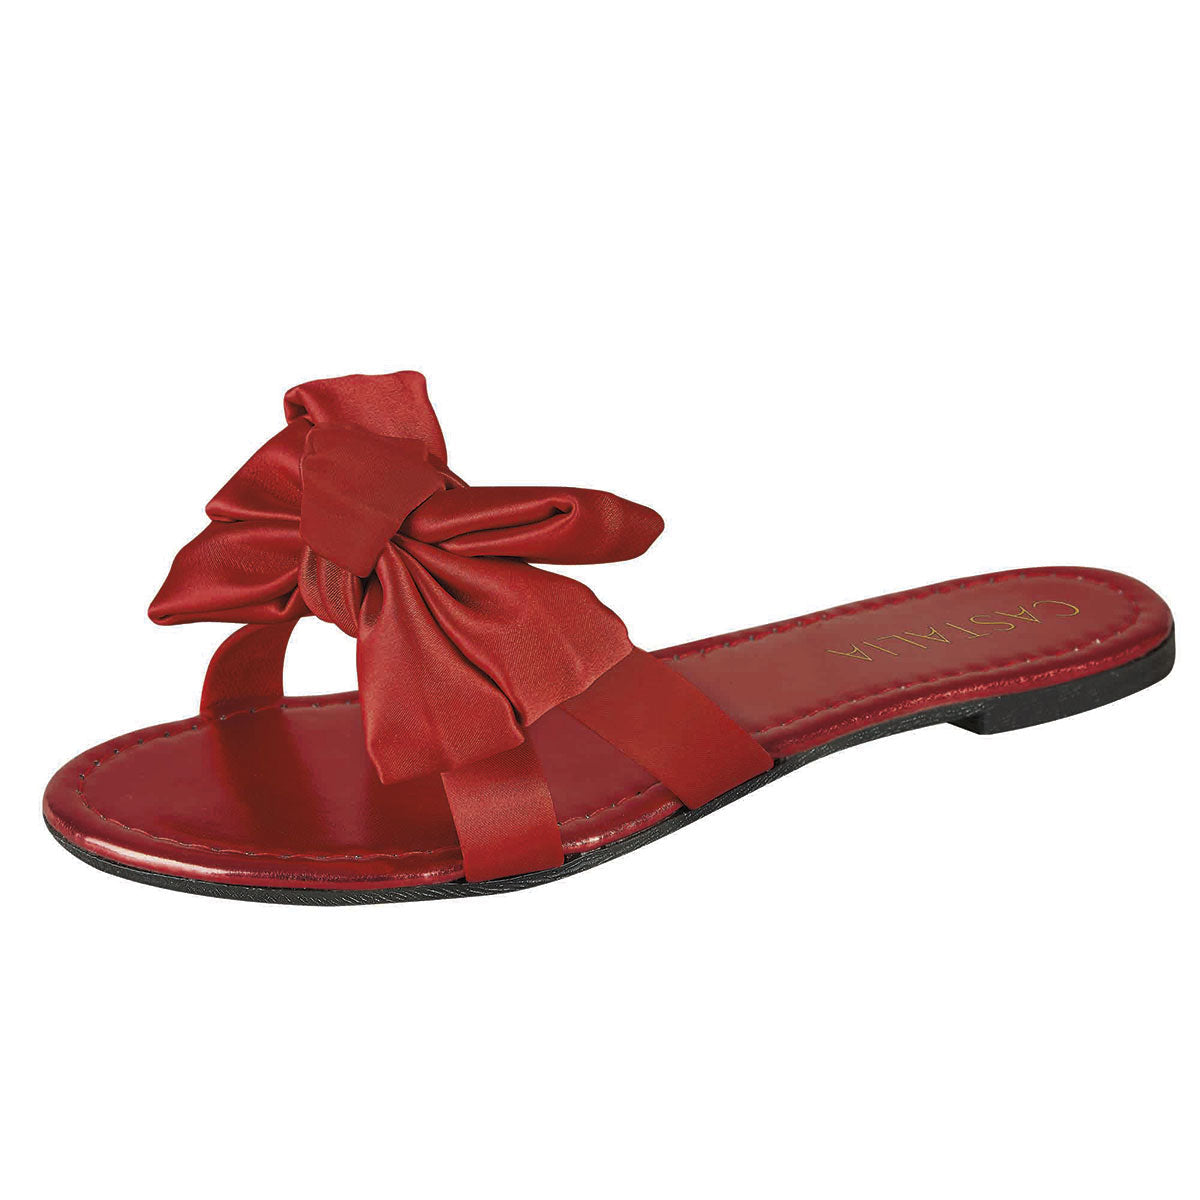 Sandalia Para Mujer CASTALIA Rojo Textil con Moño 319-04